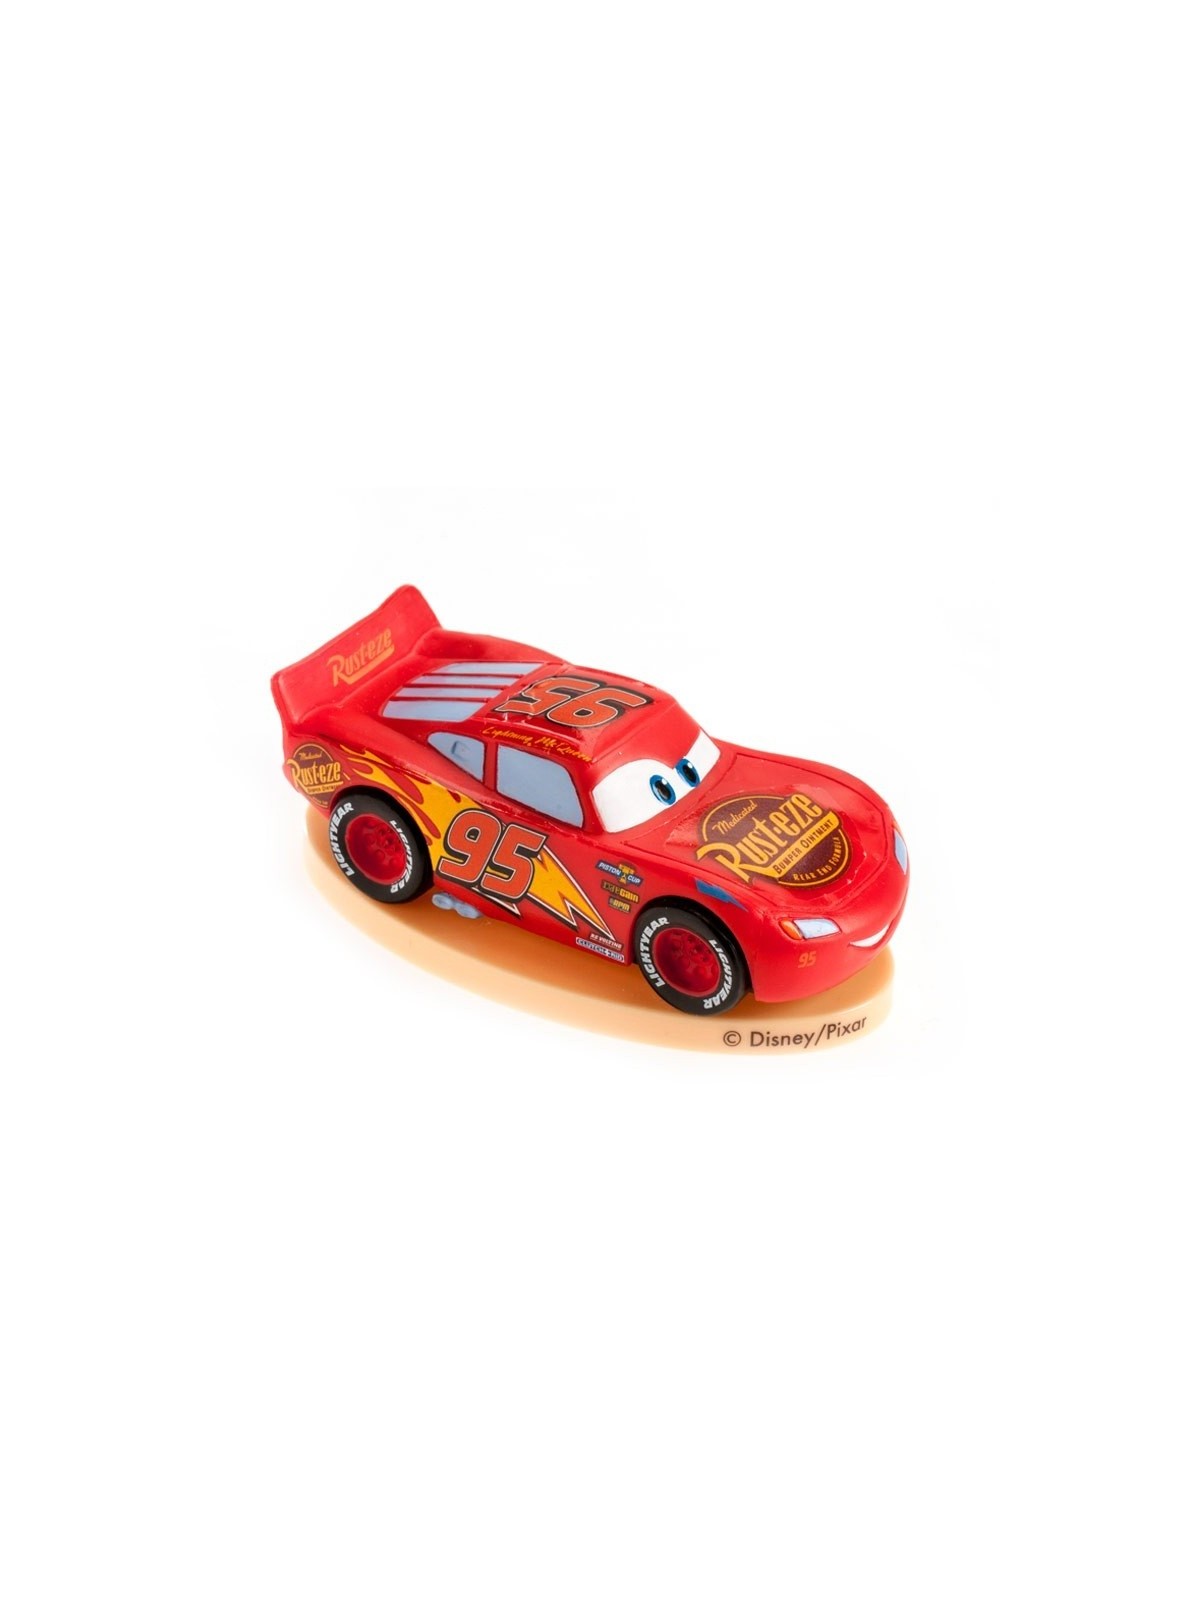 DeKora - Dekorační figurka - Cars - Blesk McQueen - 8cm